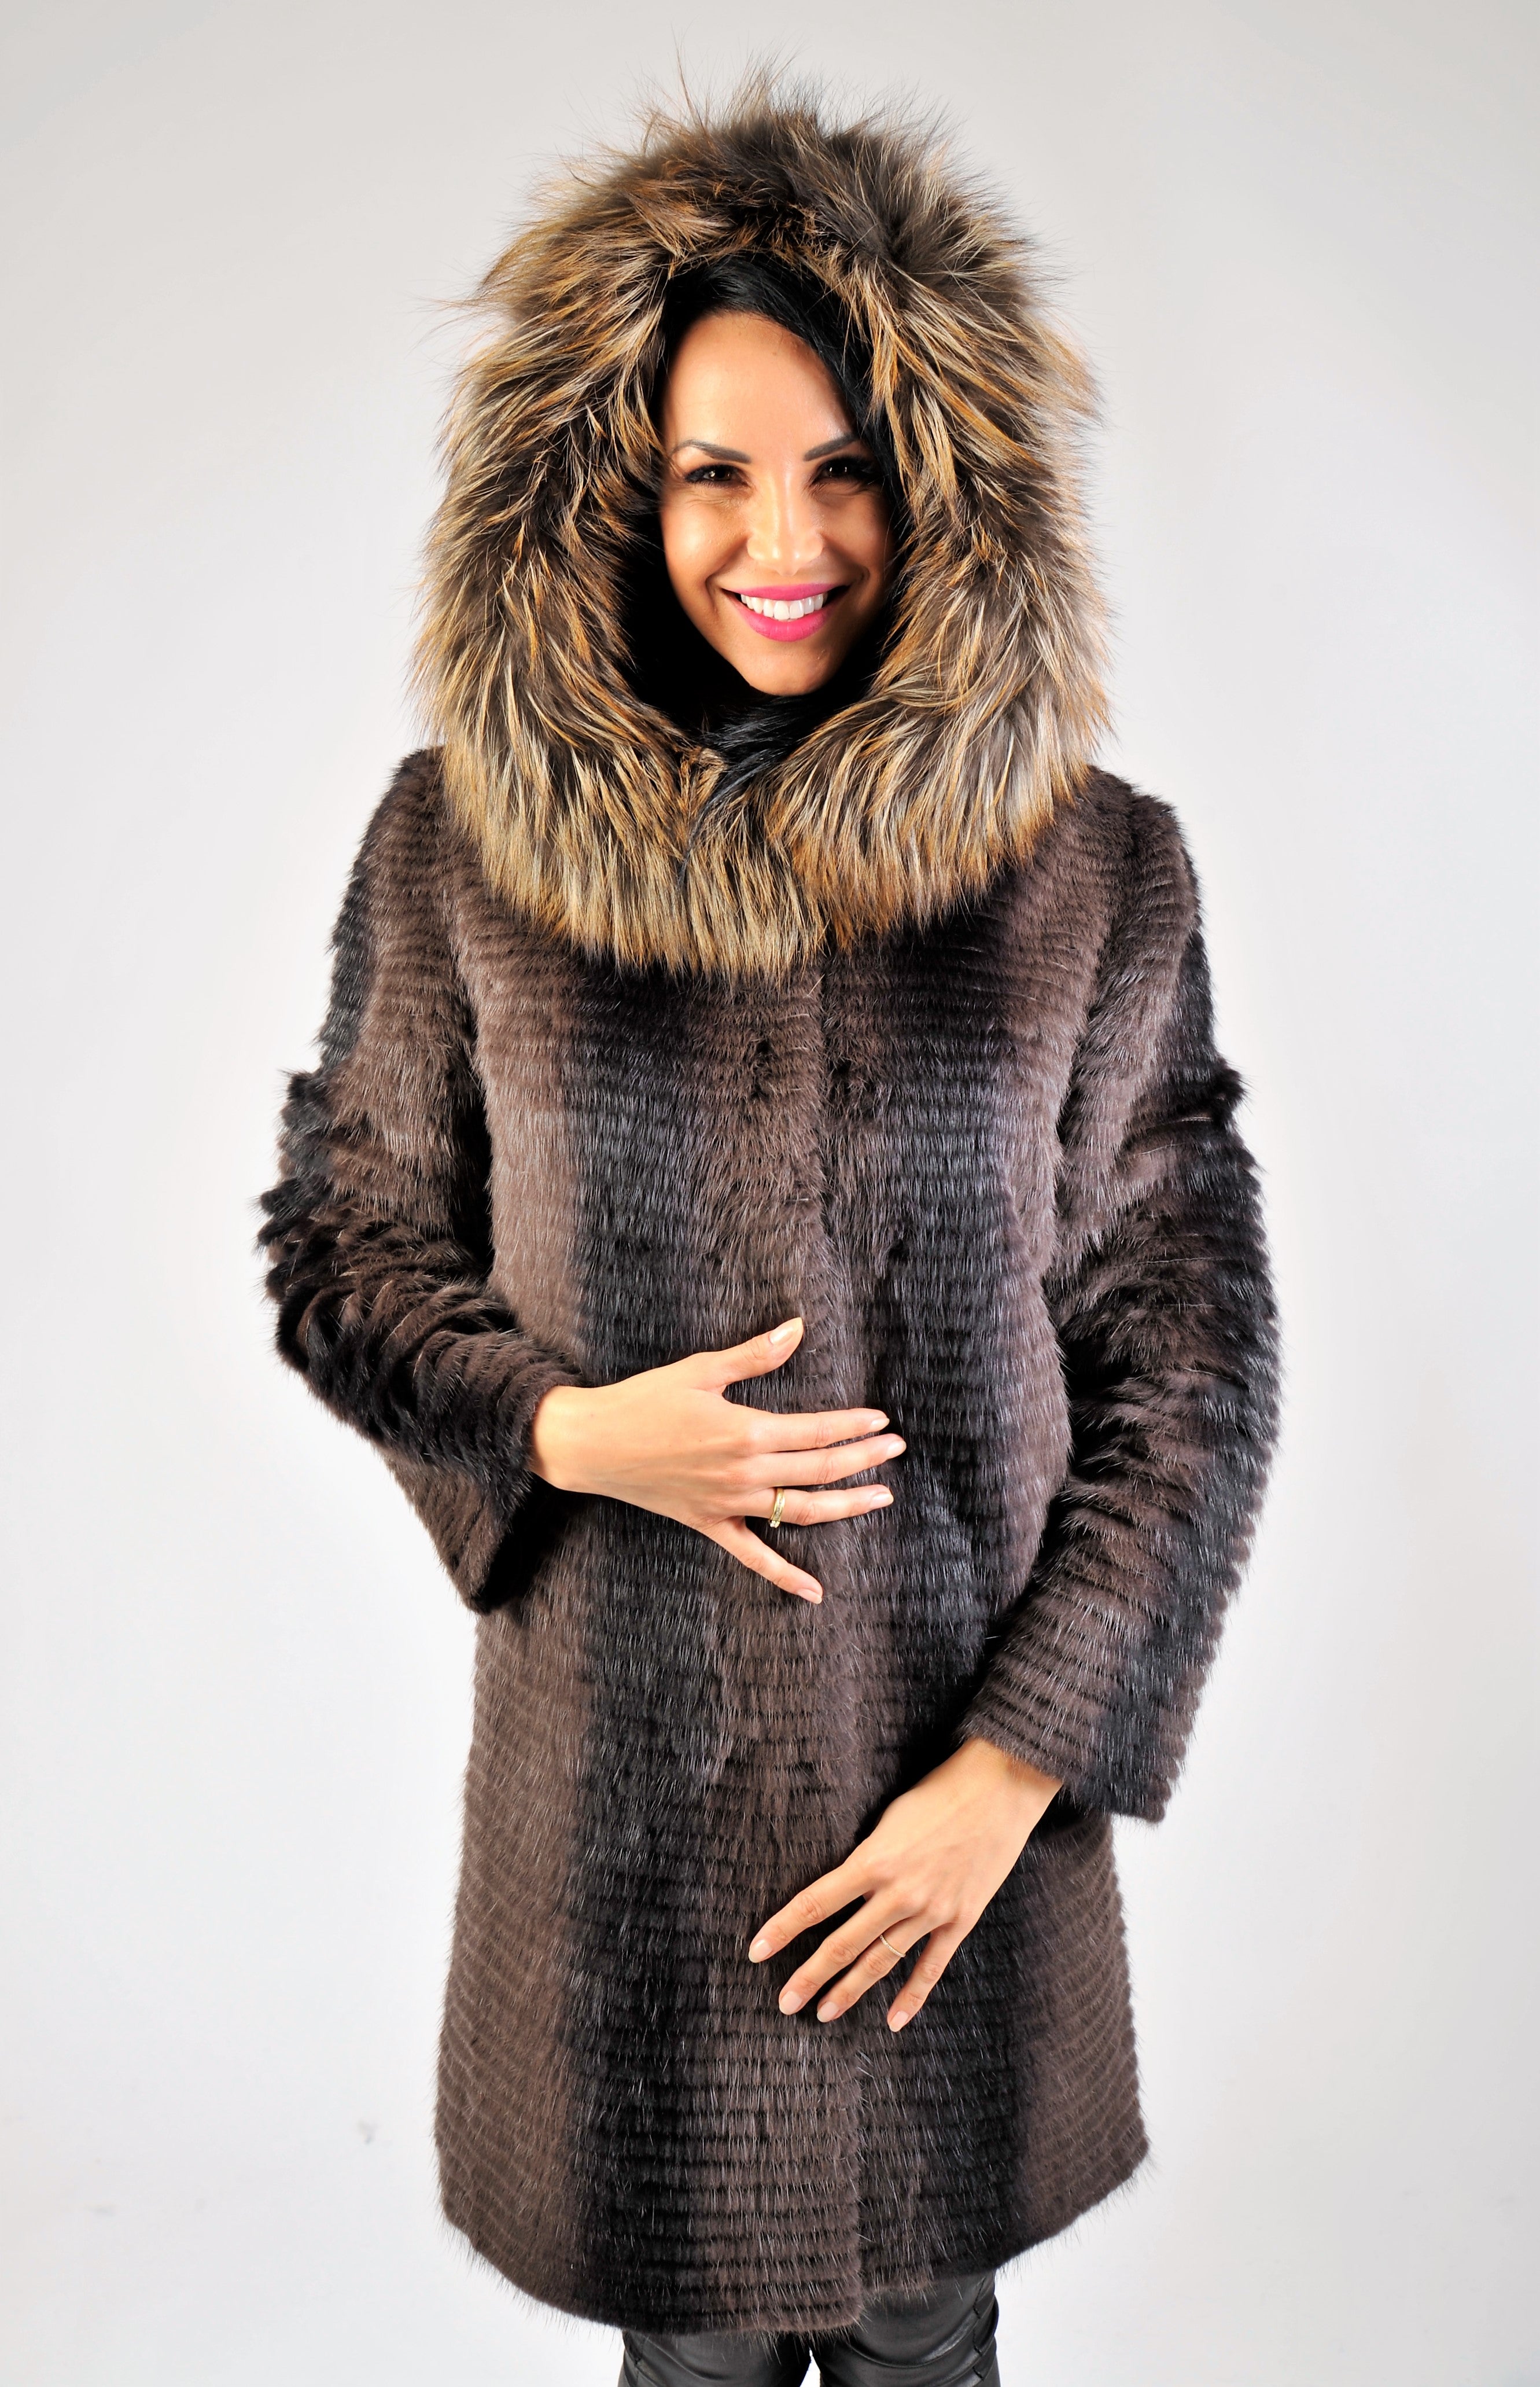 Hooded Fur Pullover Women Coat in Brown